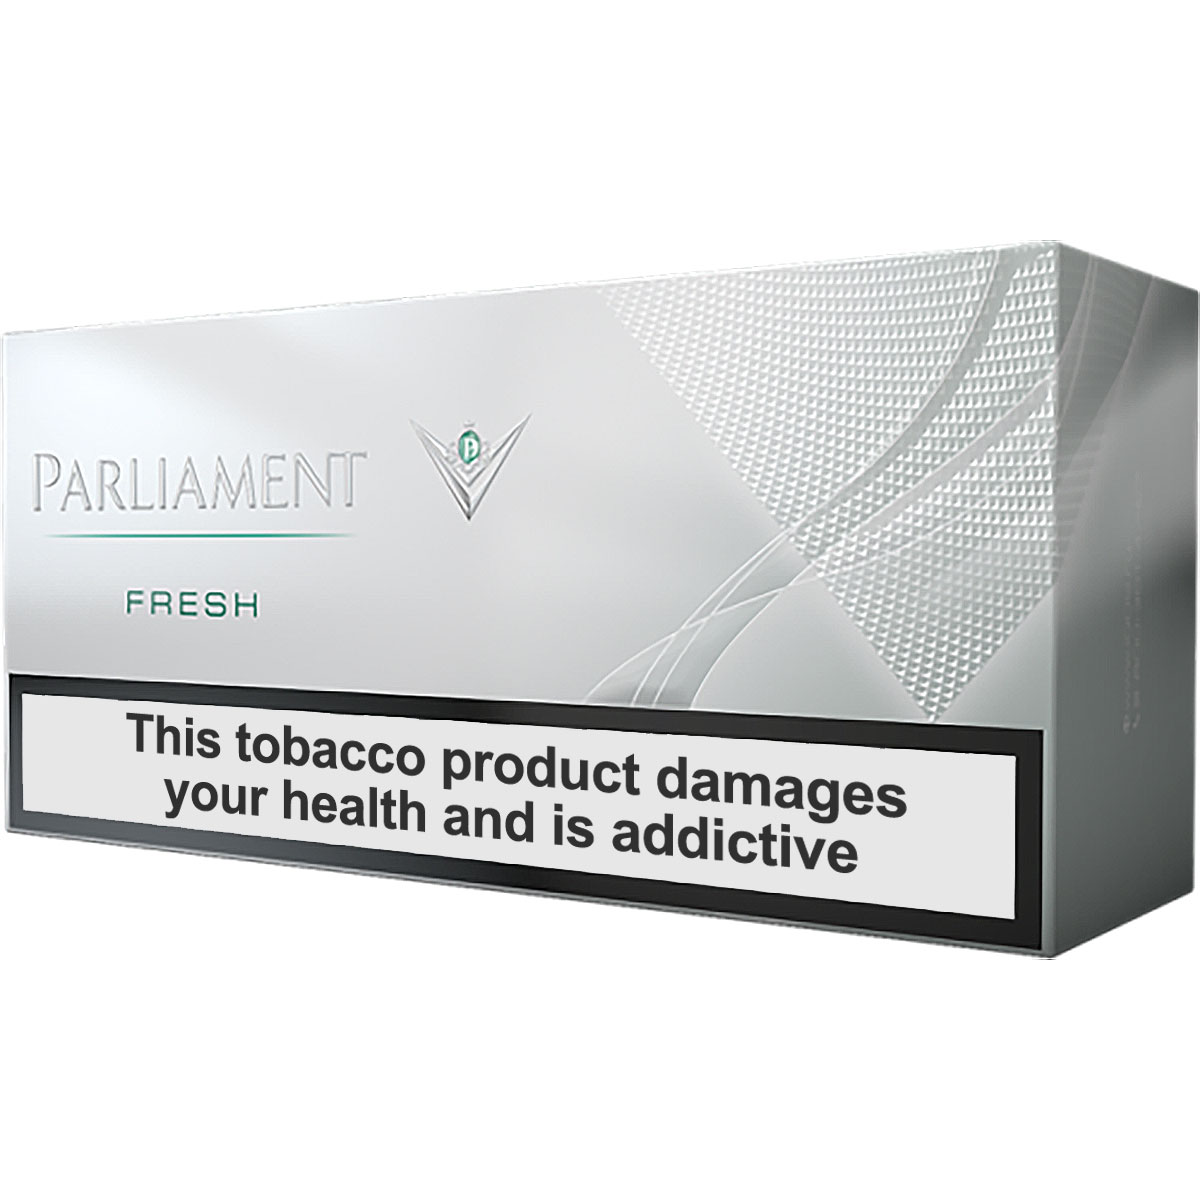 Parliament - Fresh Limited Edition